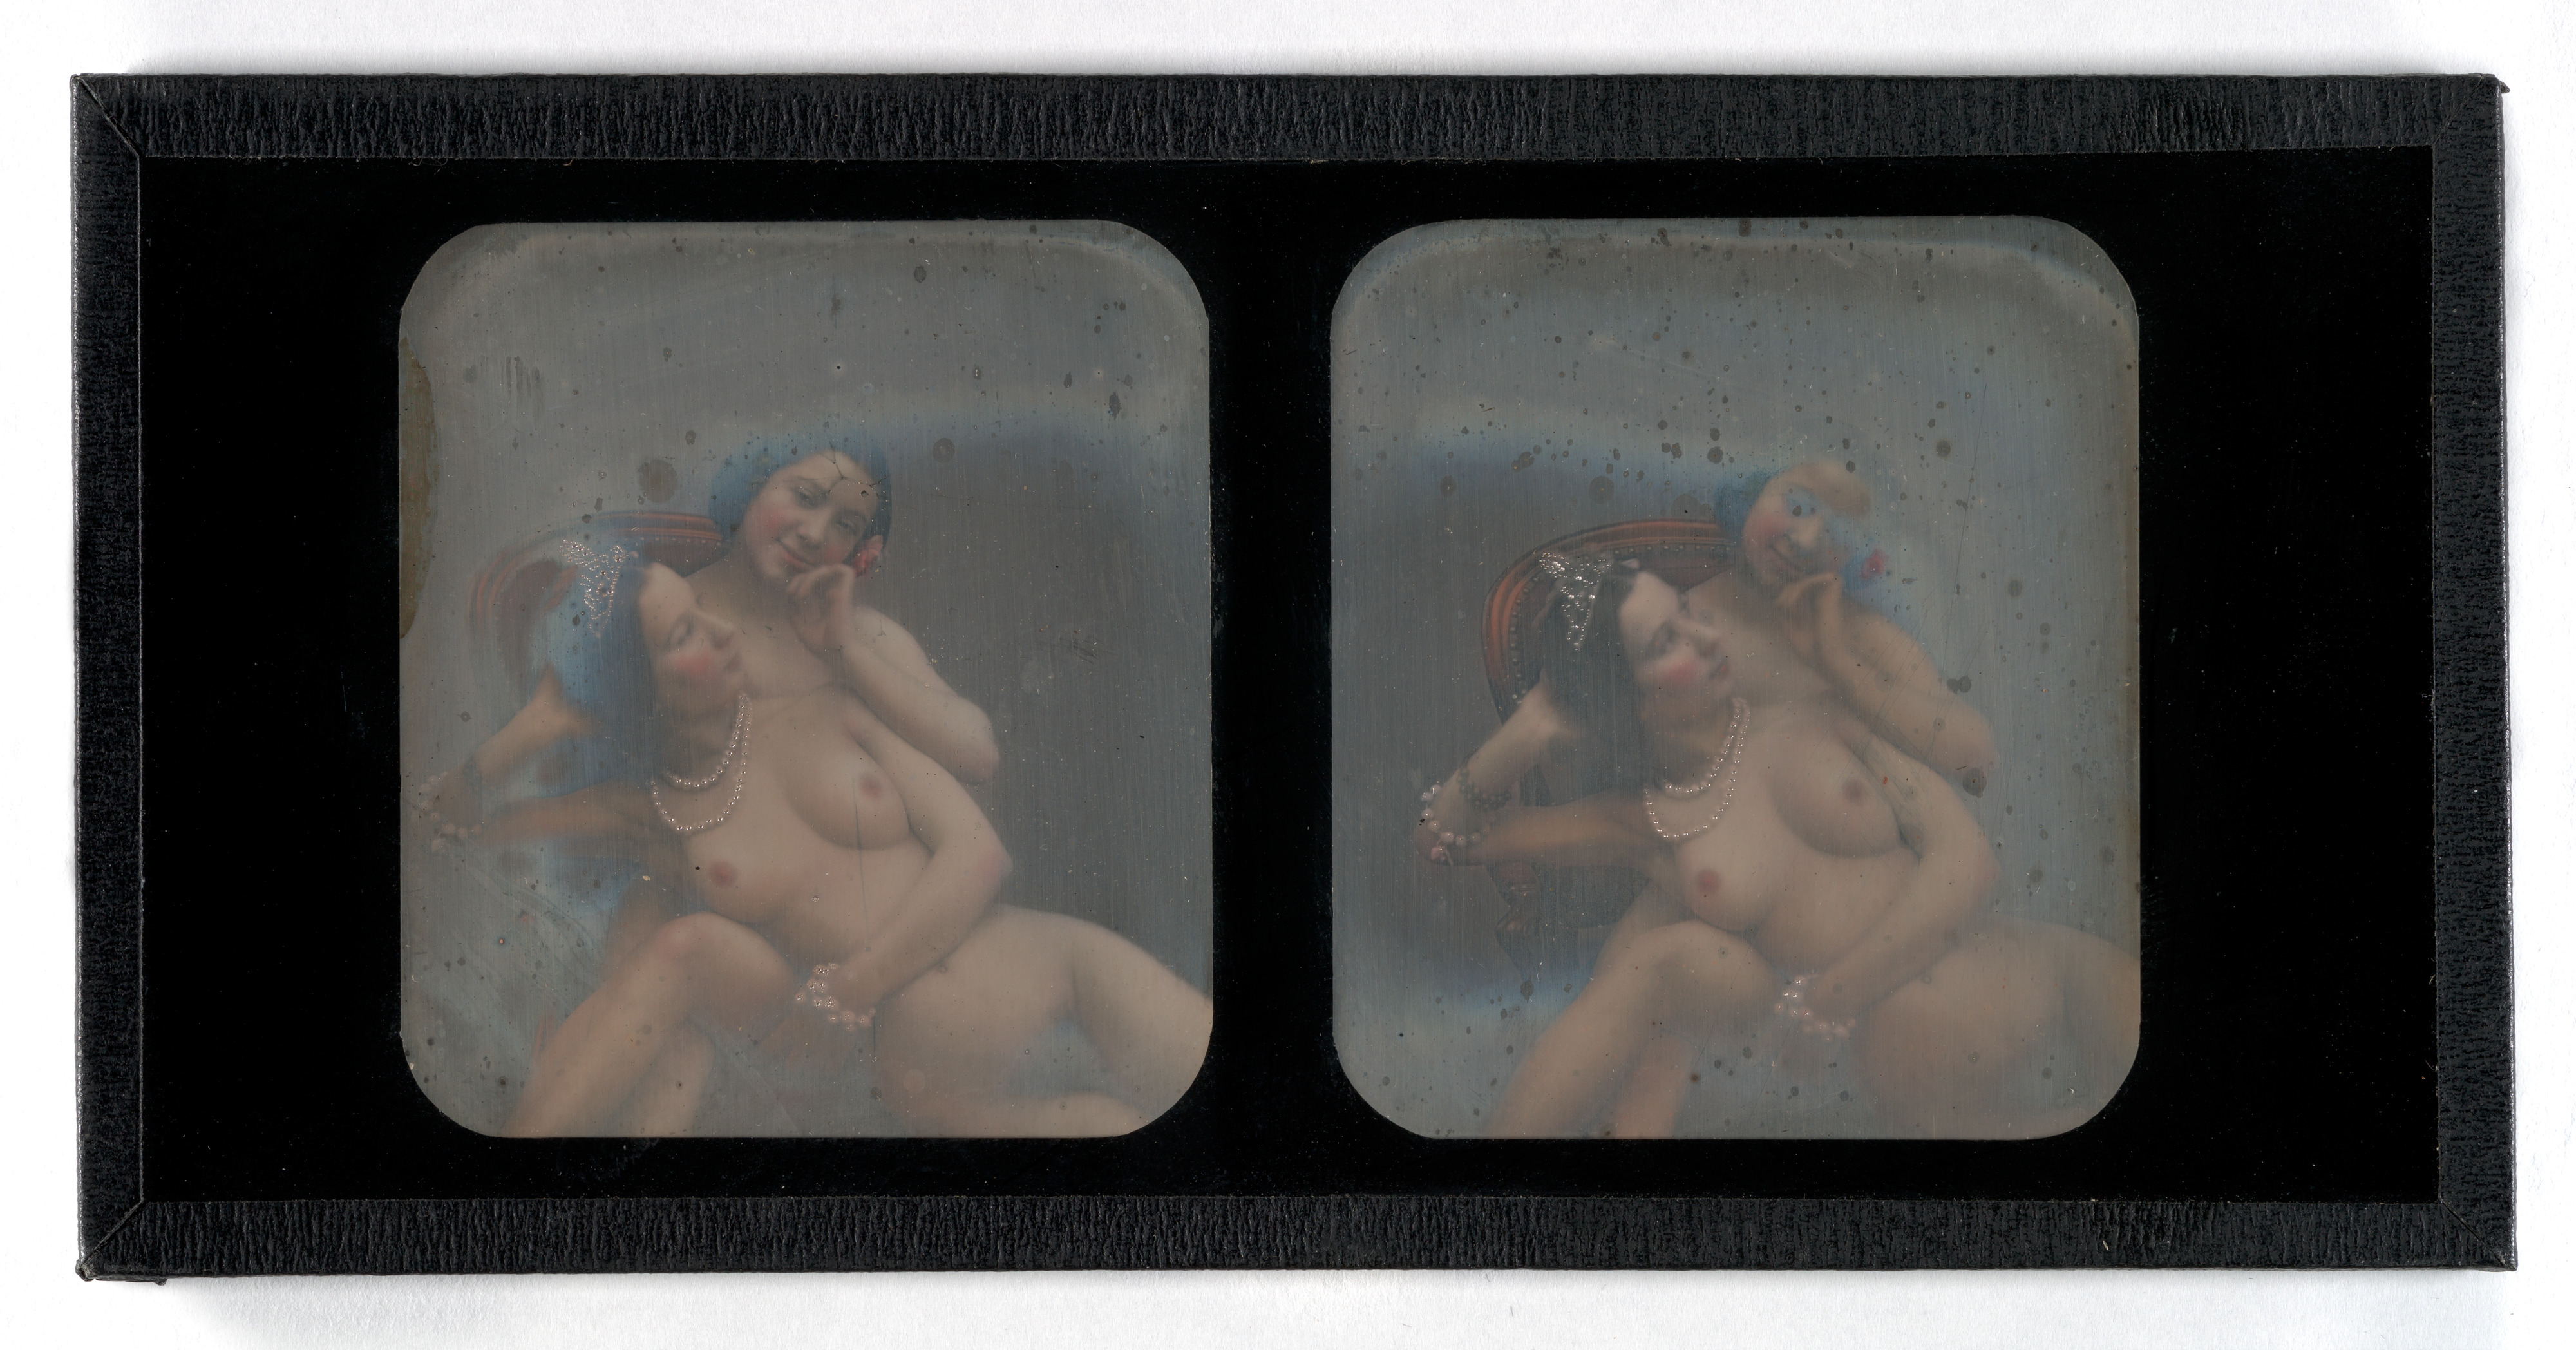 Tao Okamoto Escort Stereoscopic Photographs Nude Erotic